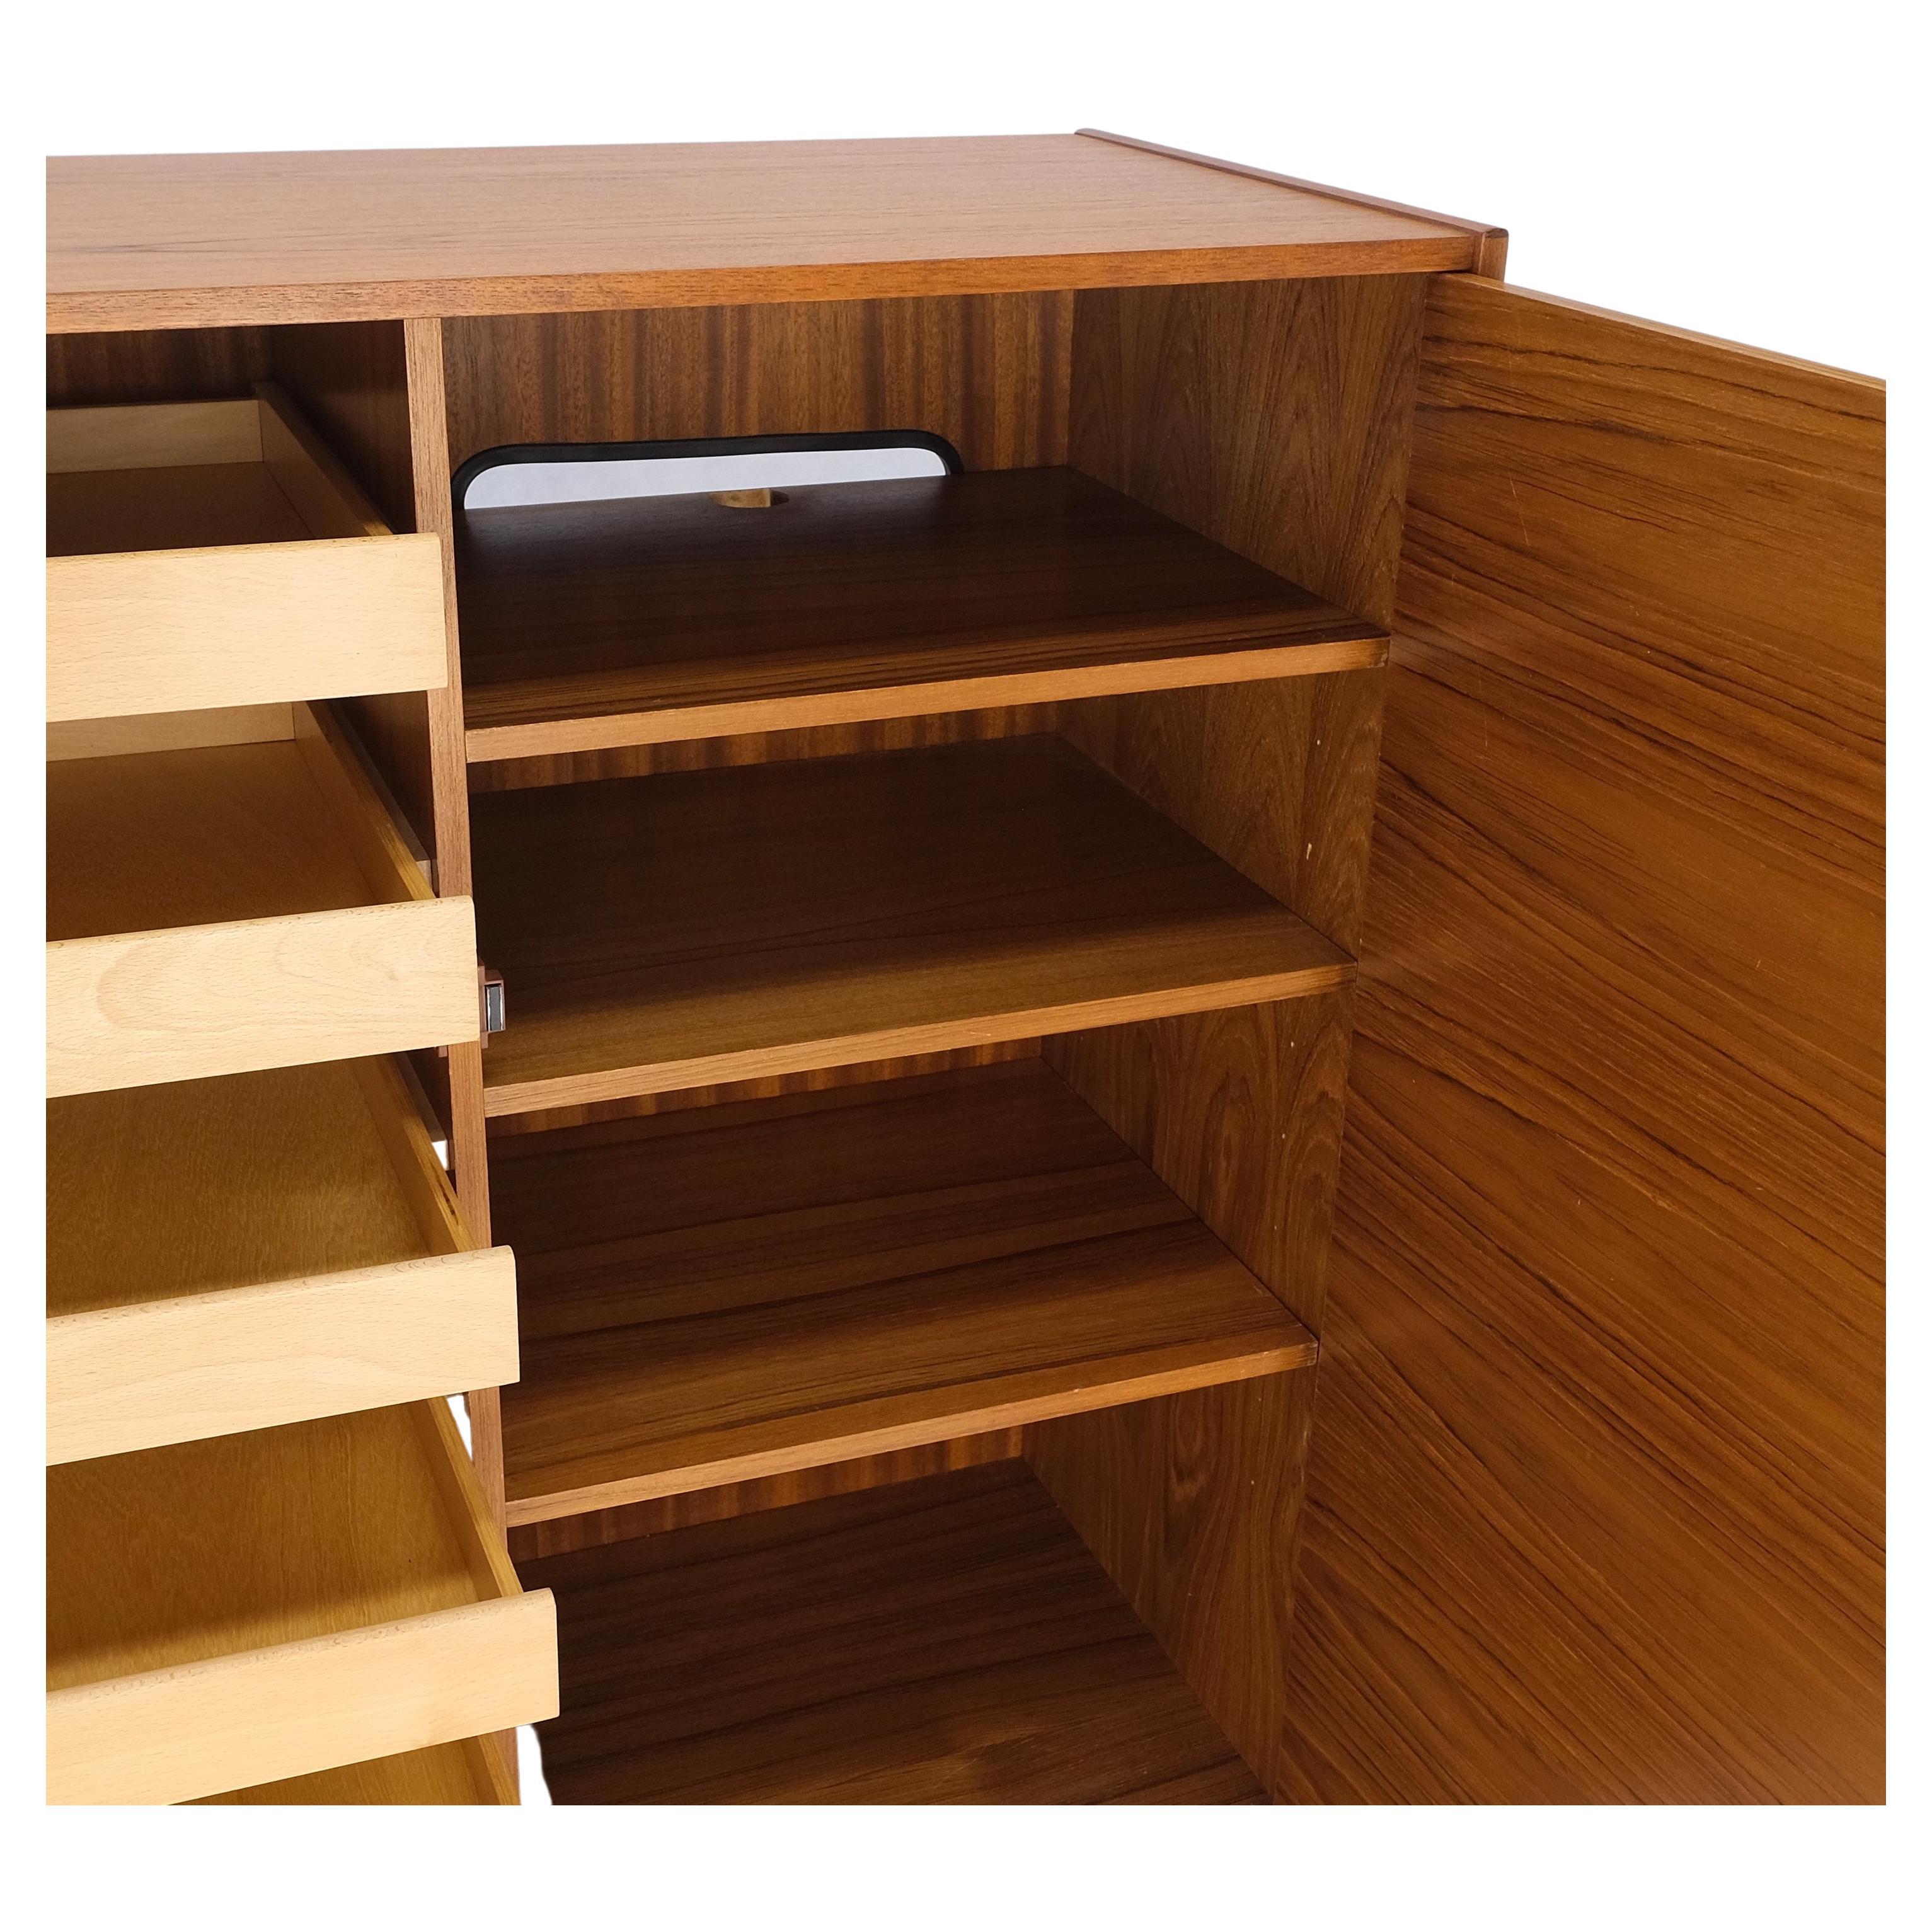 Danish Mid-Century Modern teak side by side dresser chest of drawers chifforobe credenza.